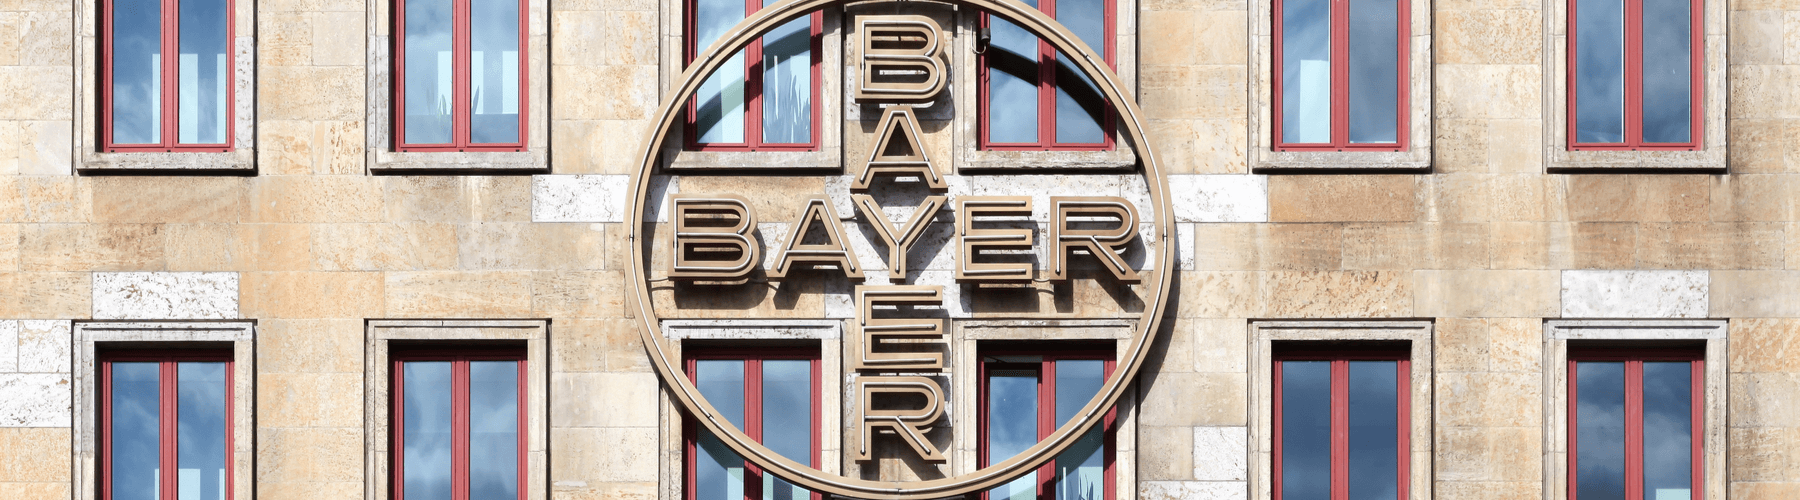 Bayer logo on building